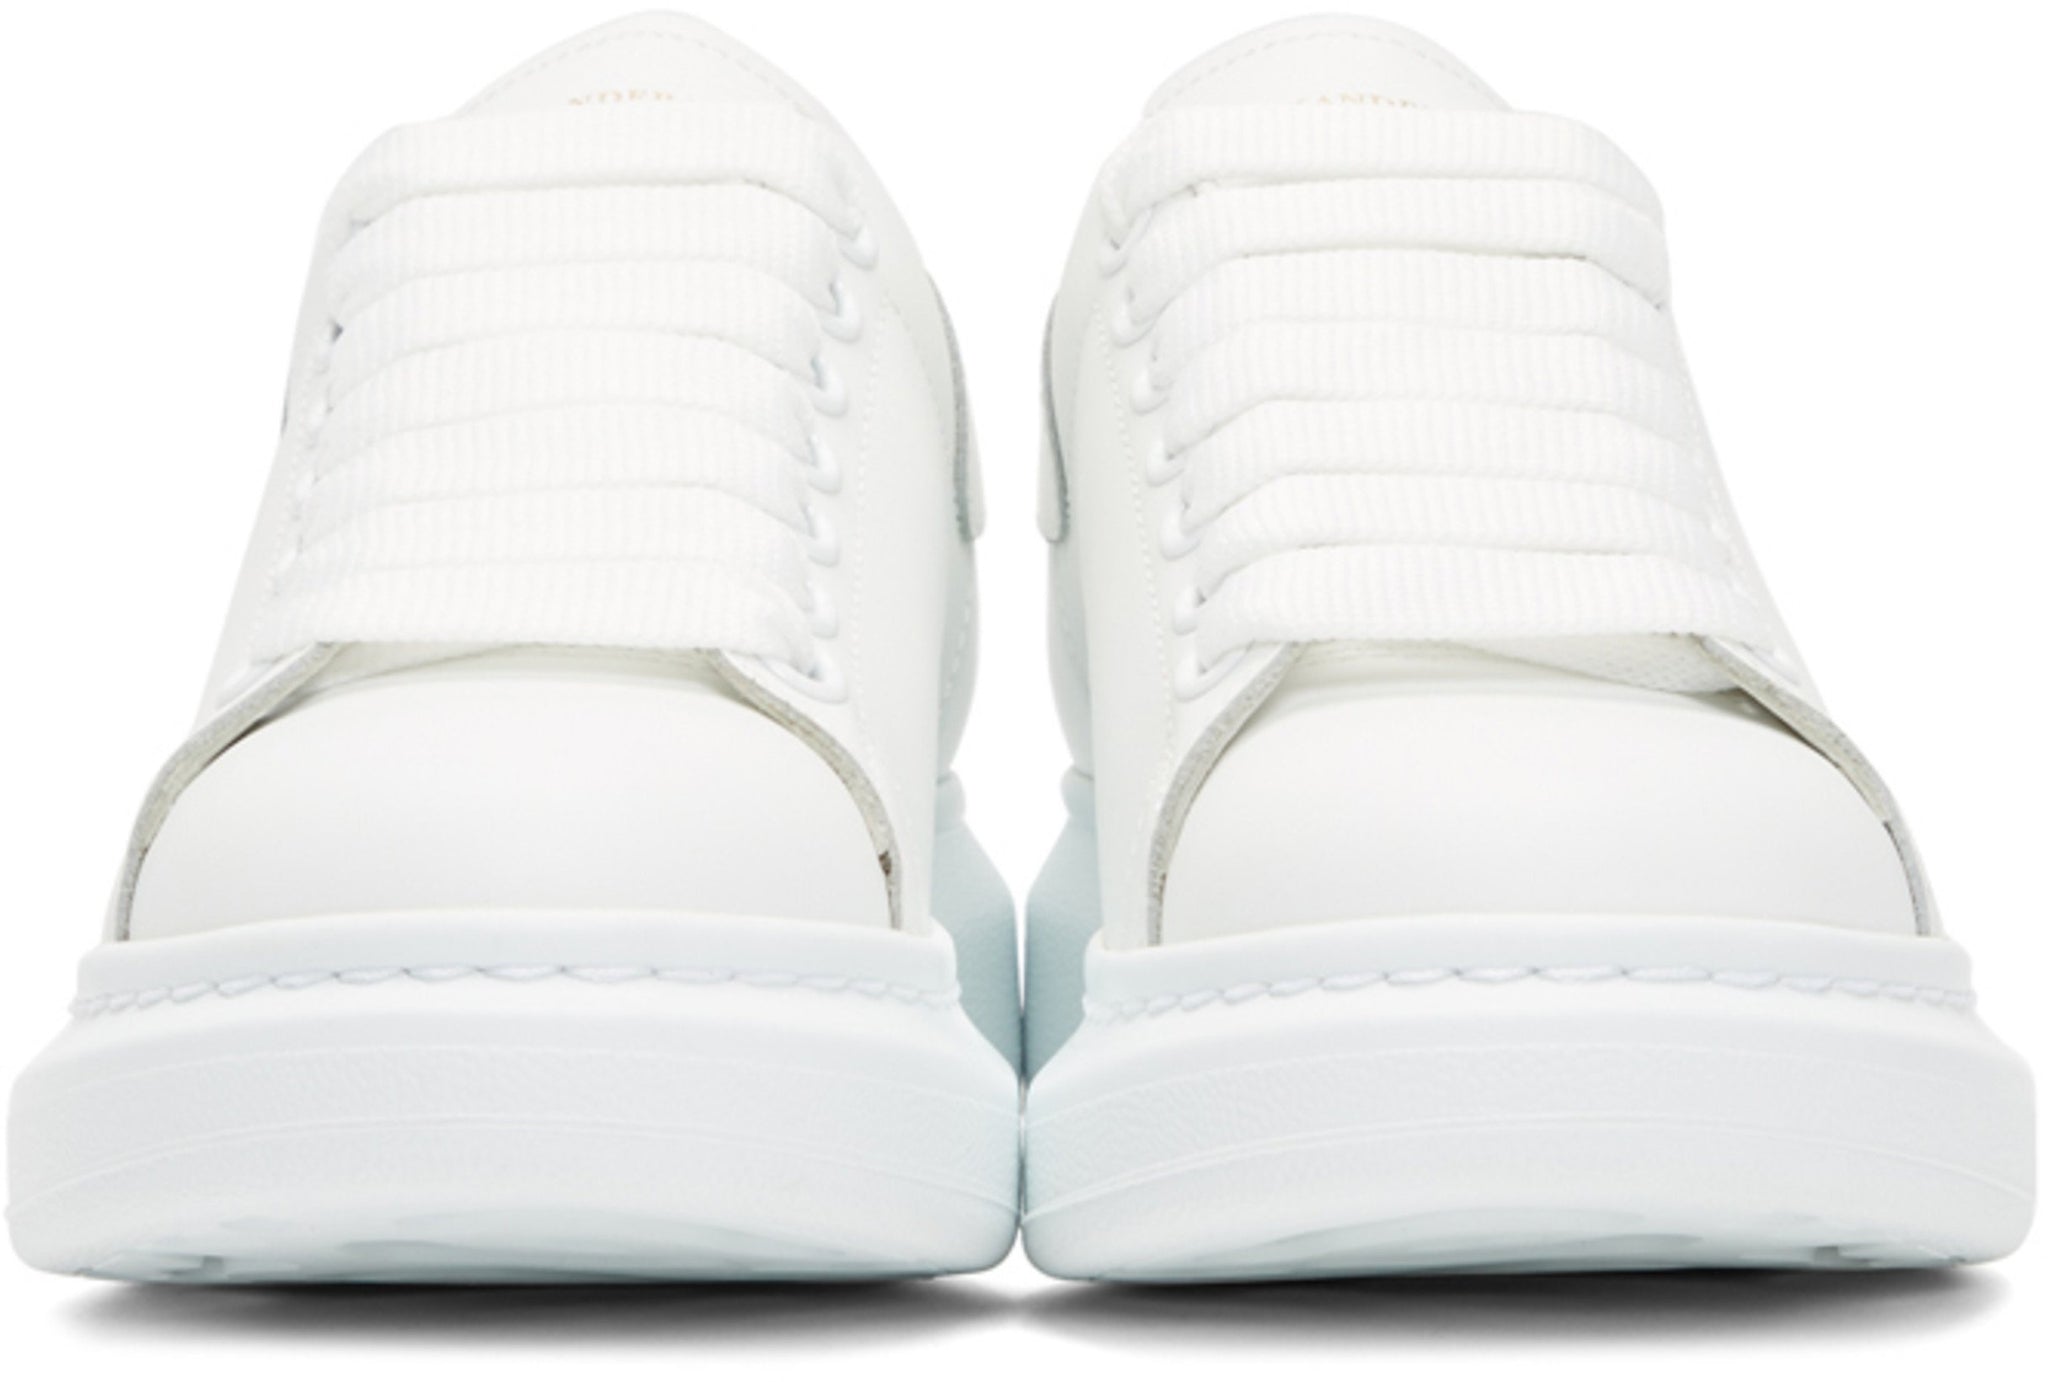 Alexander McQueen Oversized Sneakers 'White'